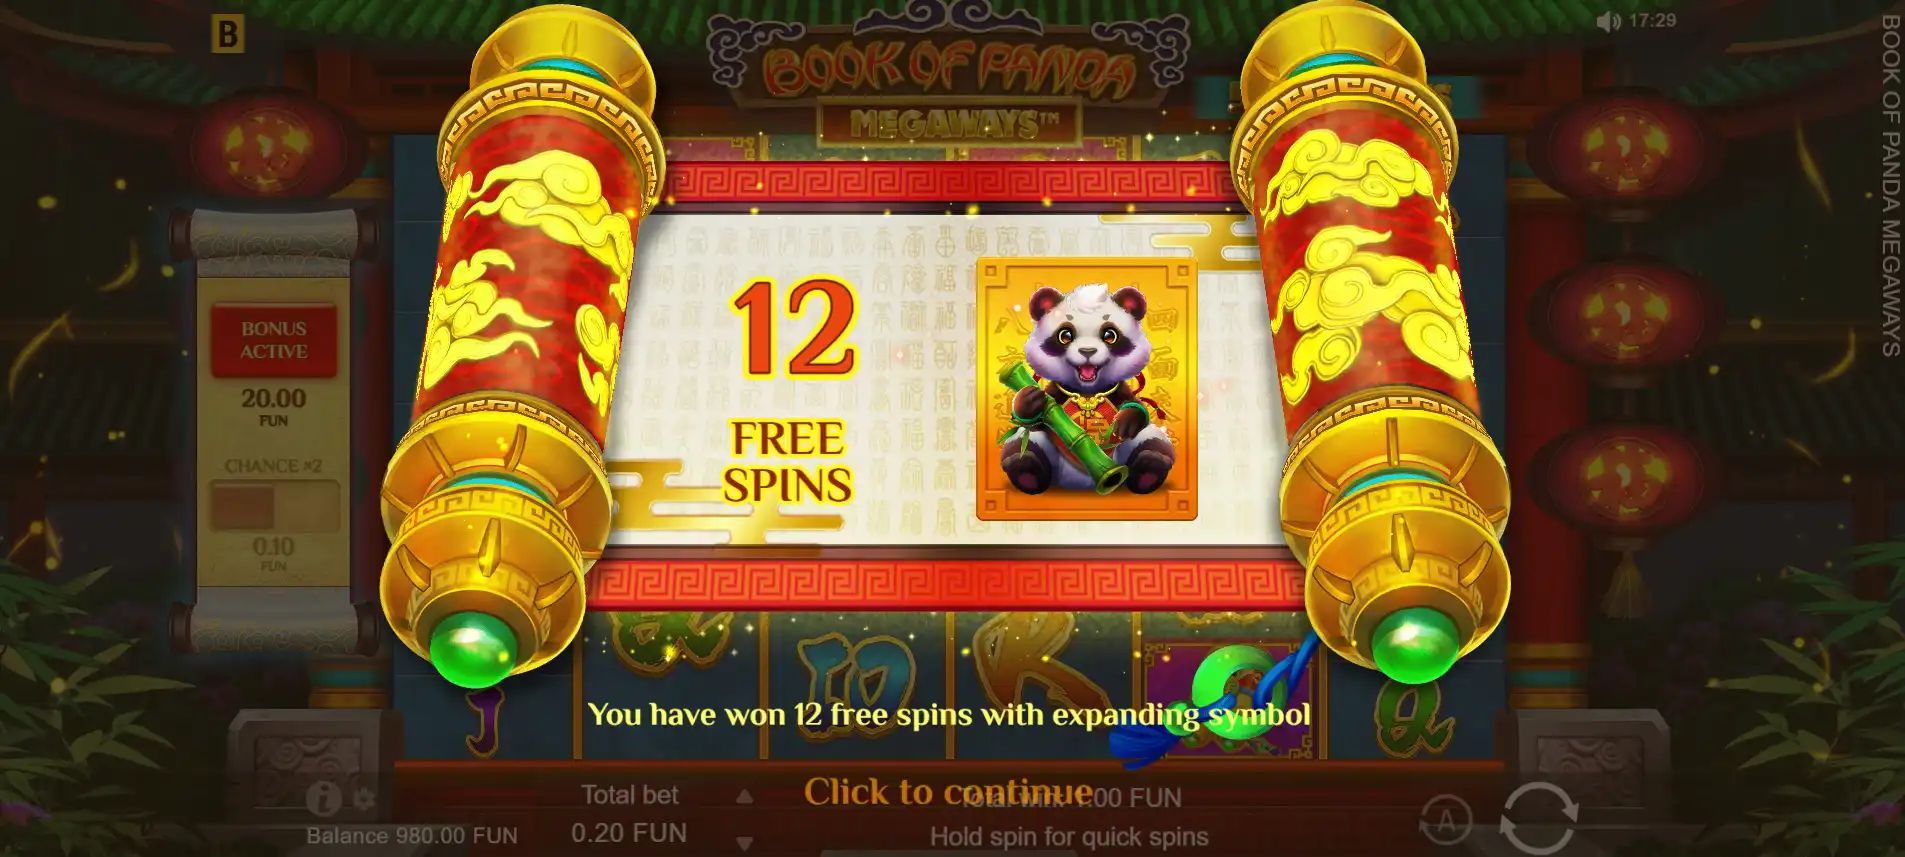 A gameplay image of bGaming's Book of Panda Megaways